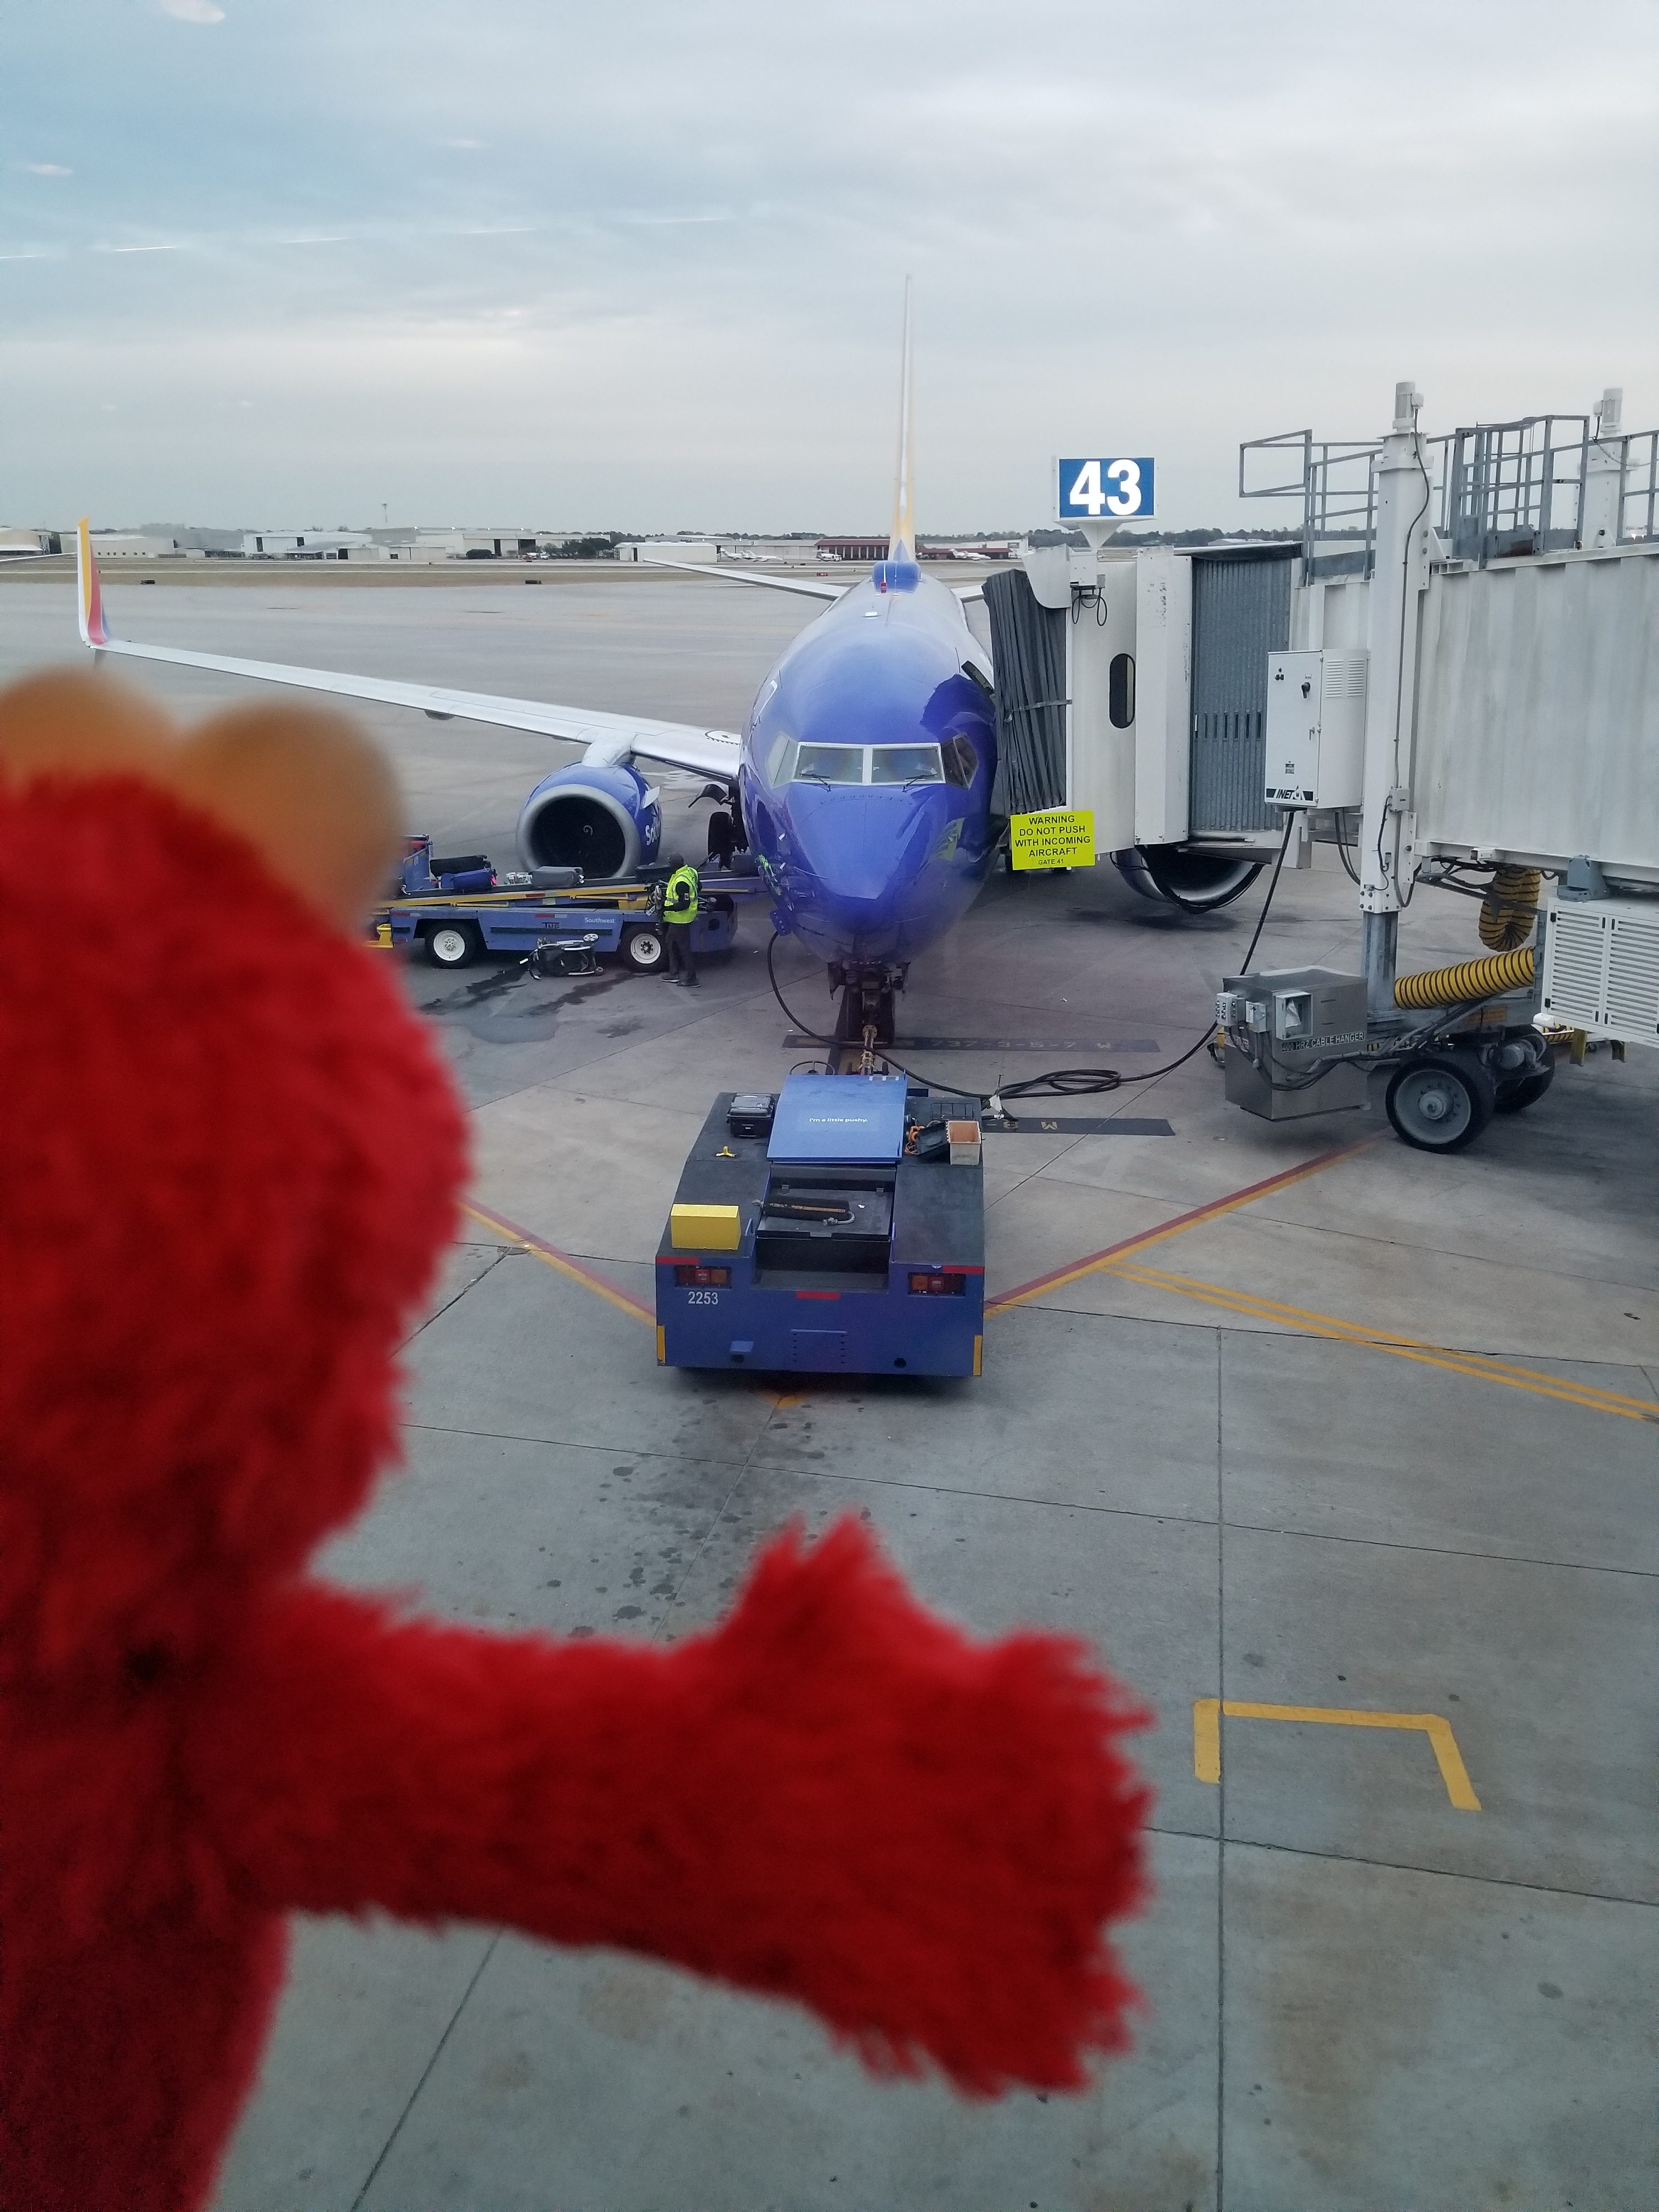 Elmo watches a plane arrive